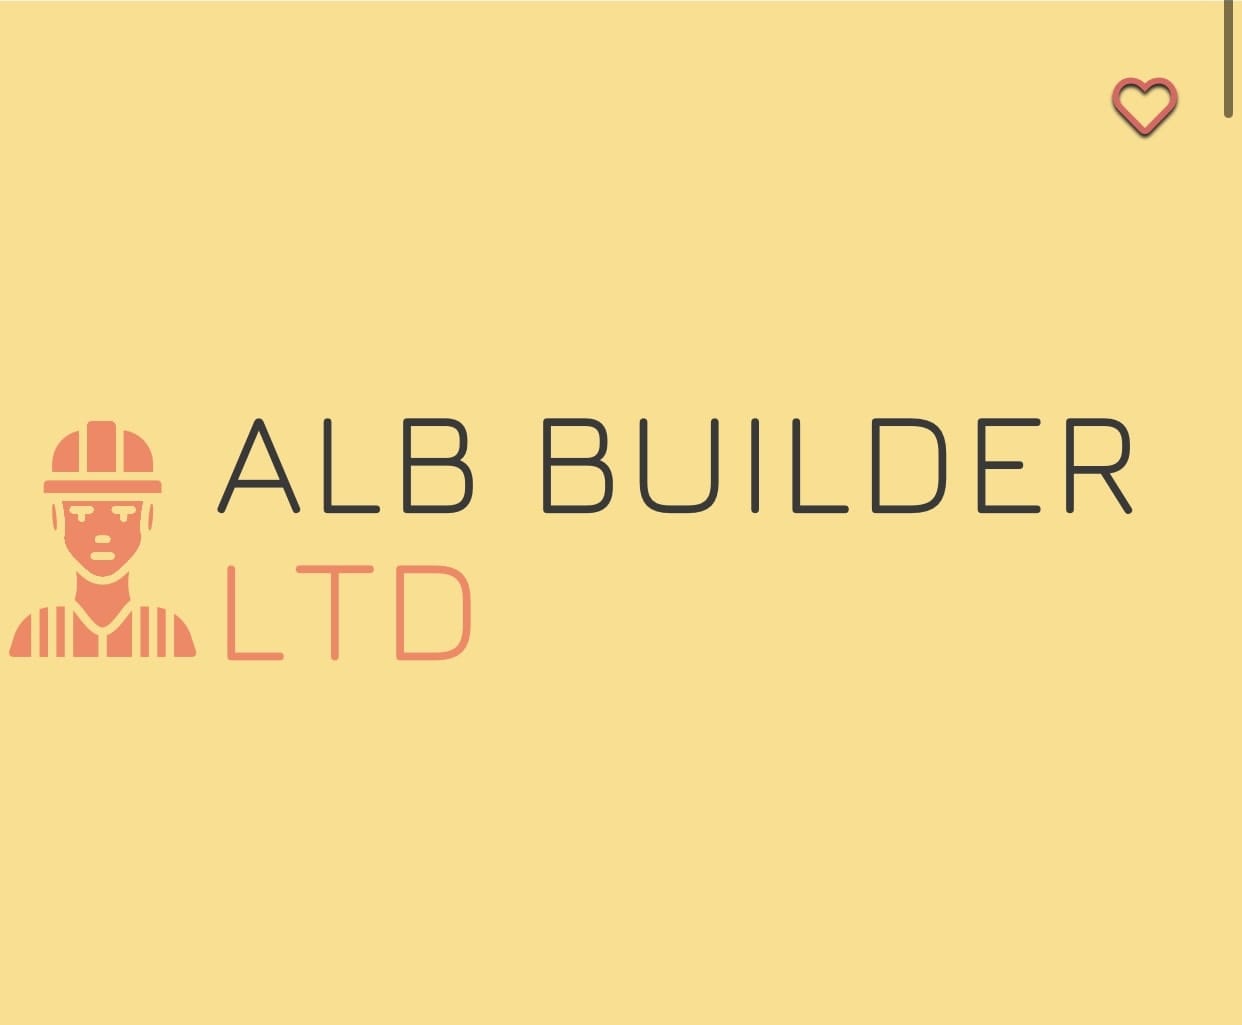 Alb Builder Ltd